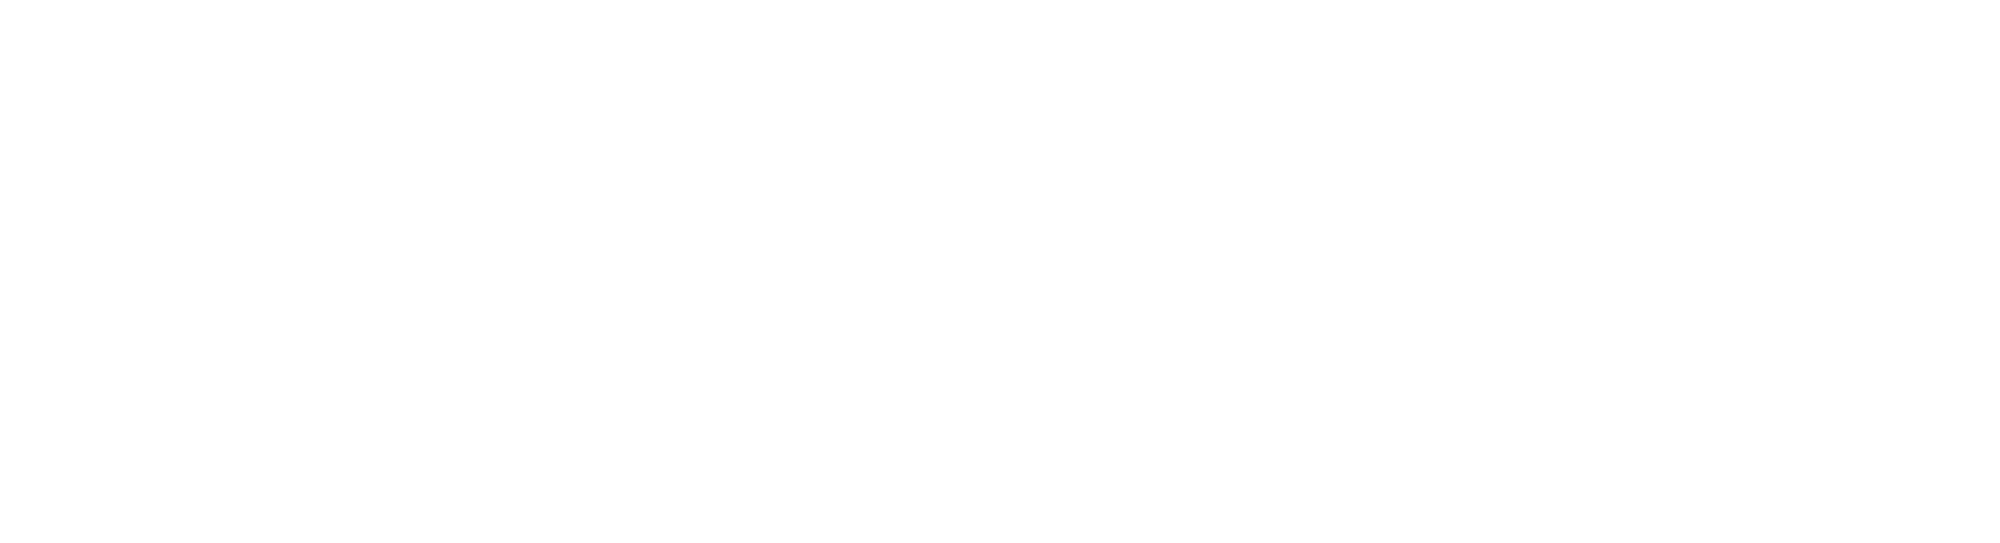 Client Logo - LinkedIn